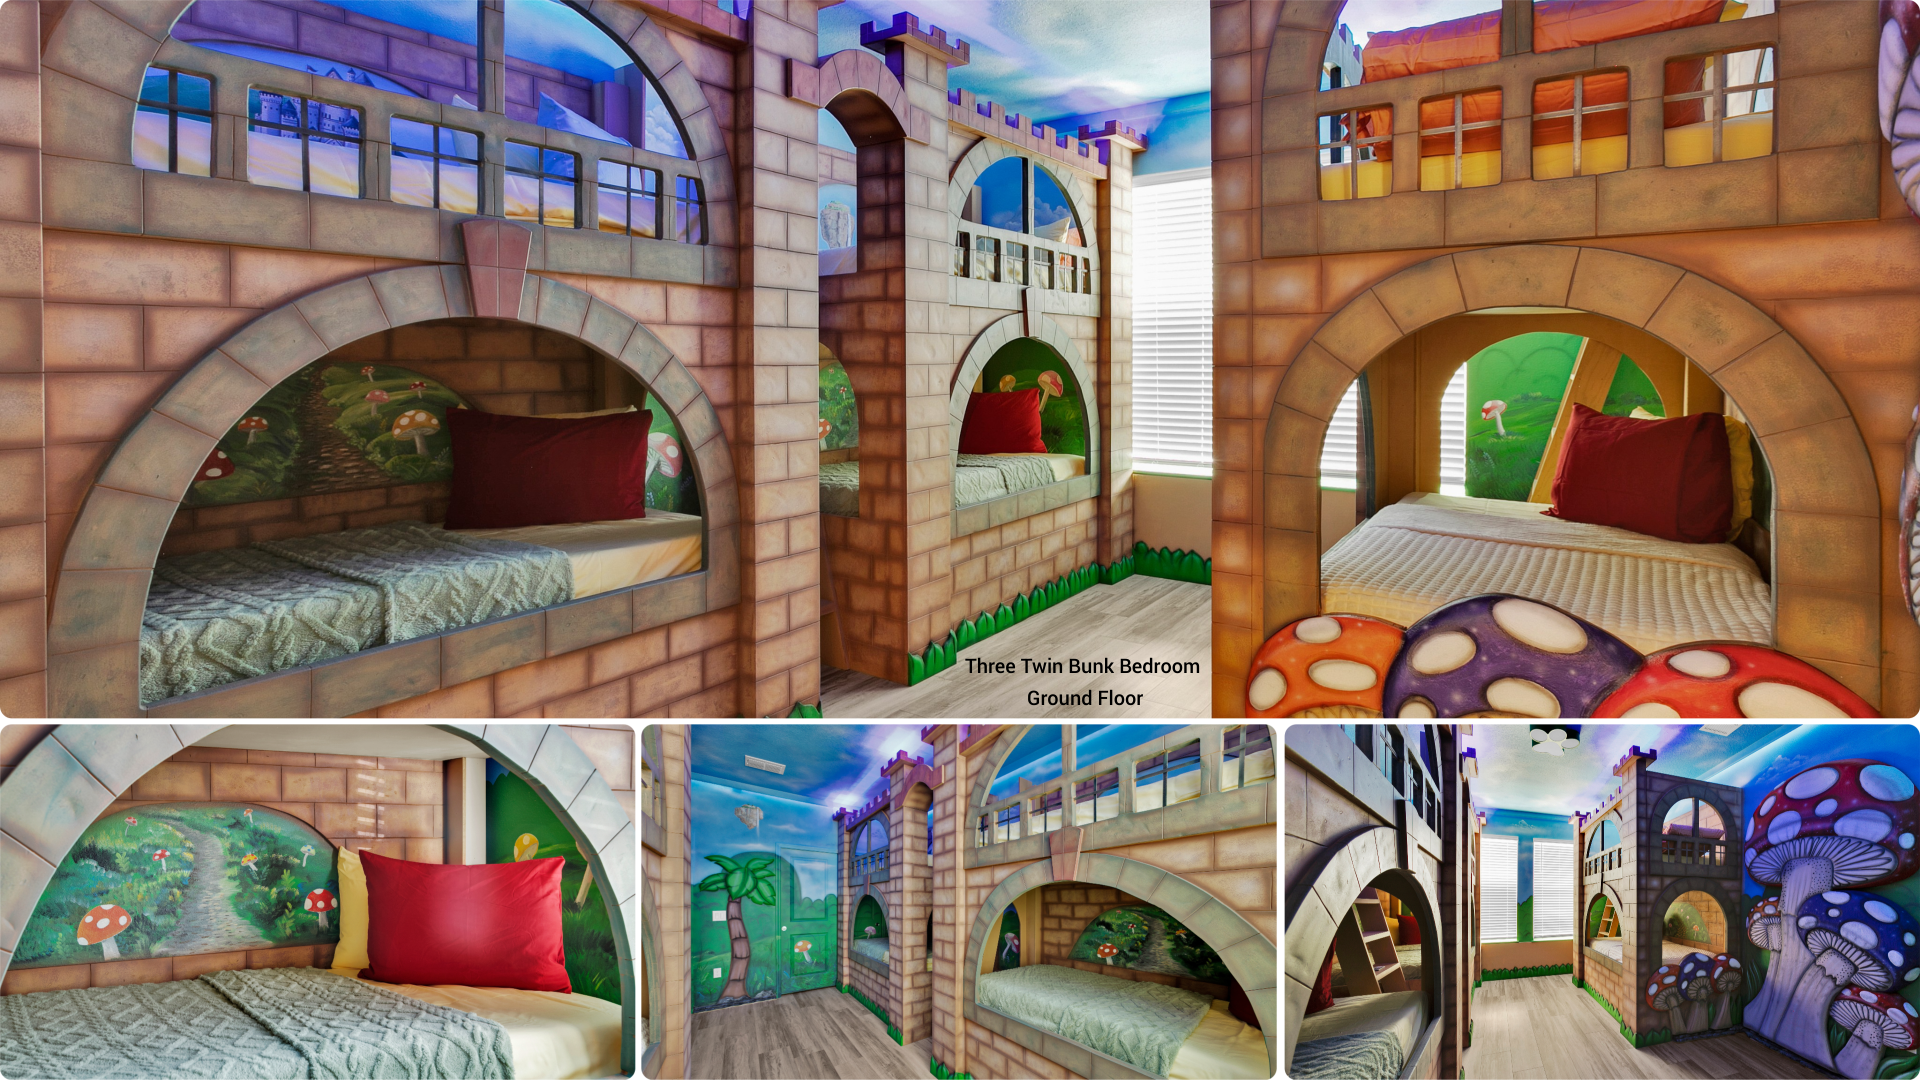 Three Twin/Twin Bunks Bedroom 3-Super Mario
Downstairs
No TV